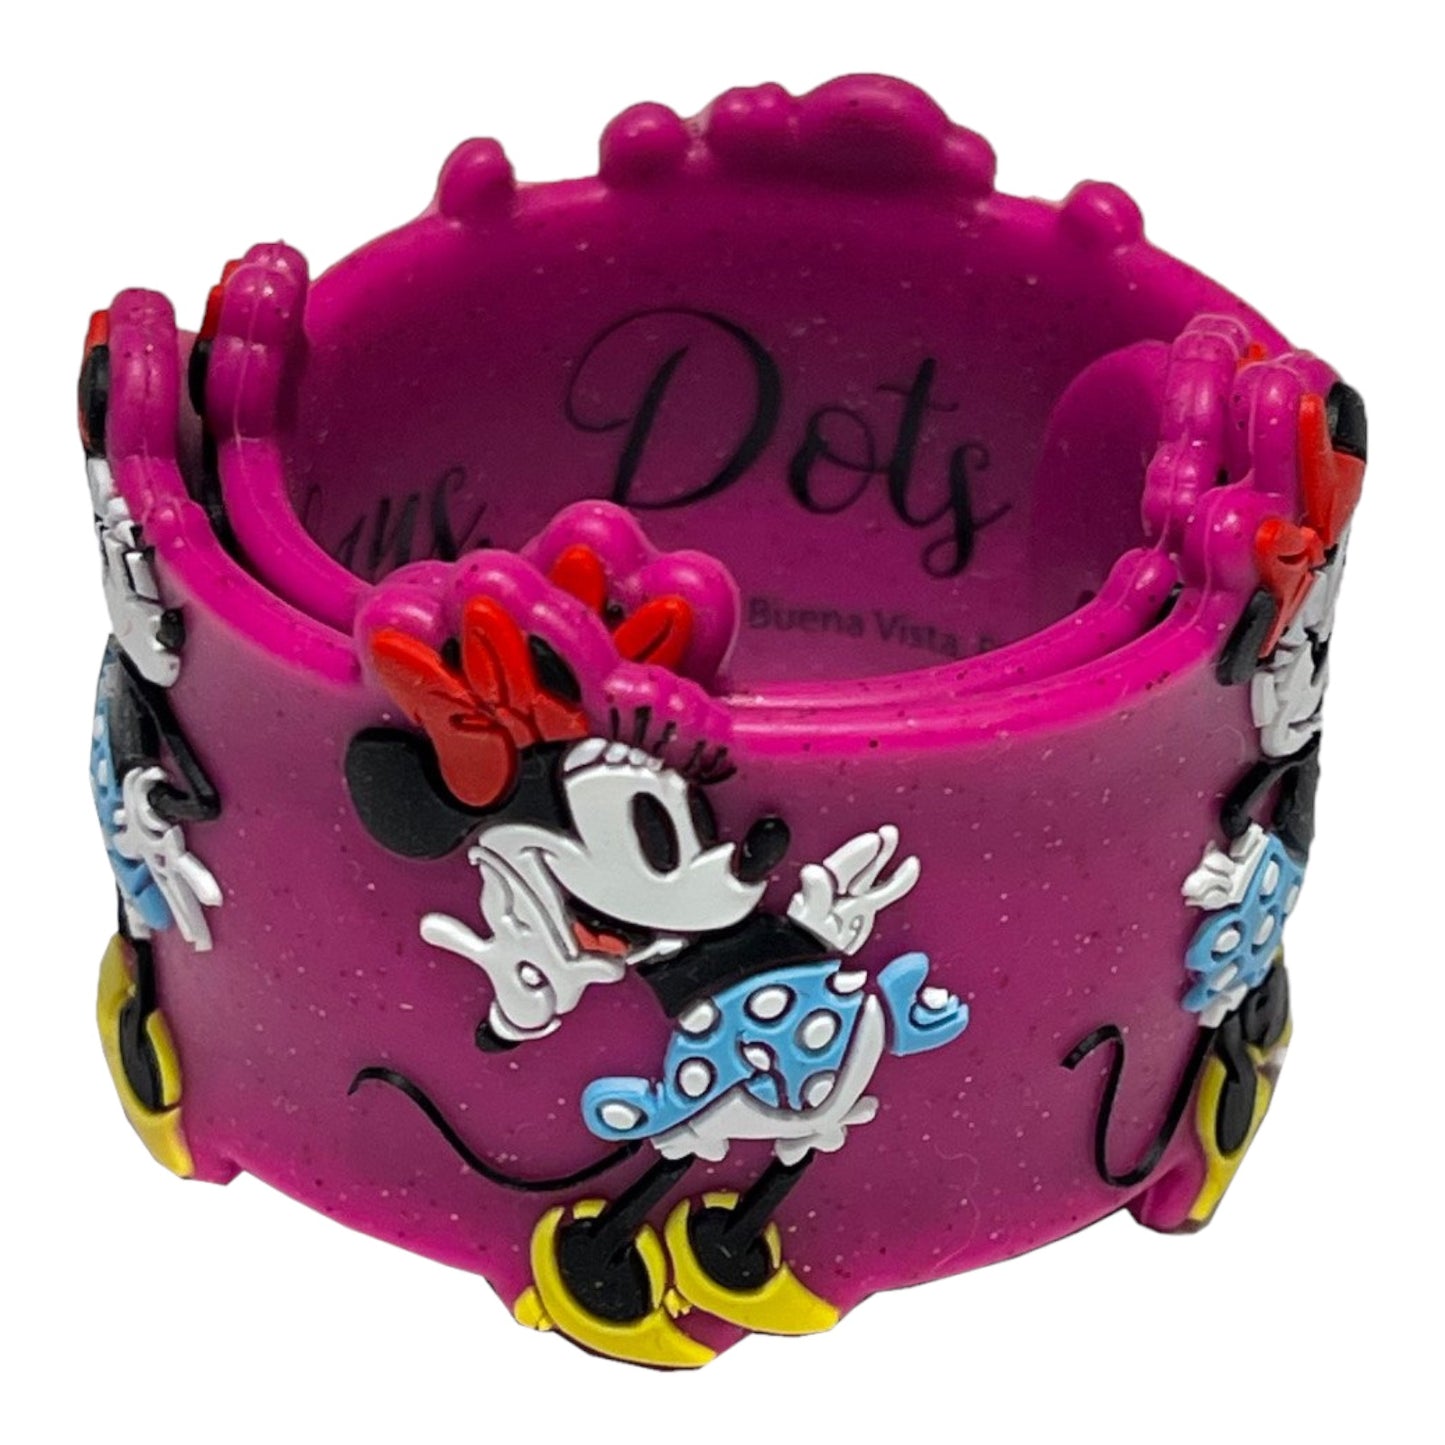 Minnie Mouse Disney Slap Bracelet - Bows Ears Dots & Heels